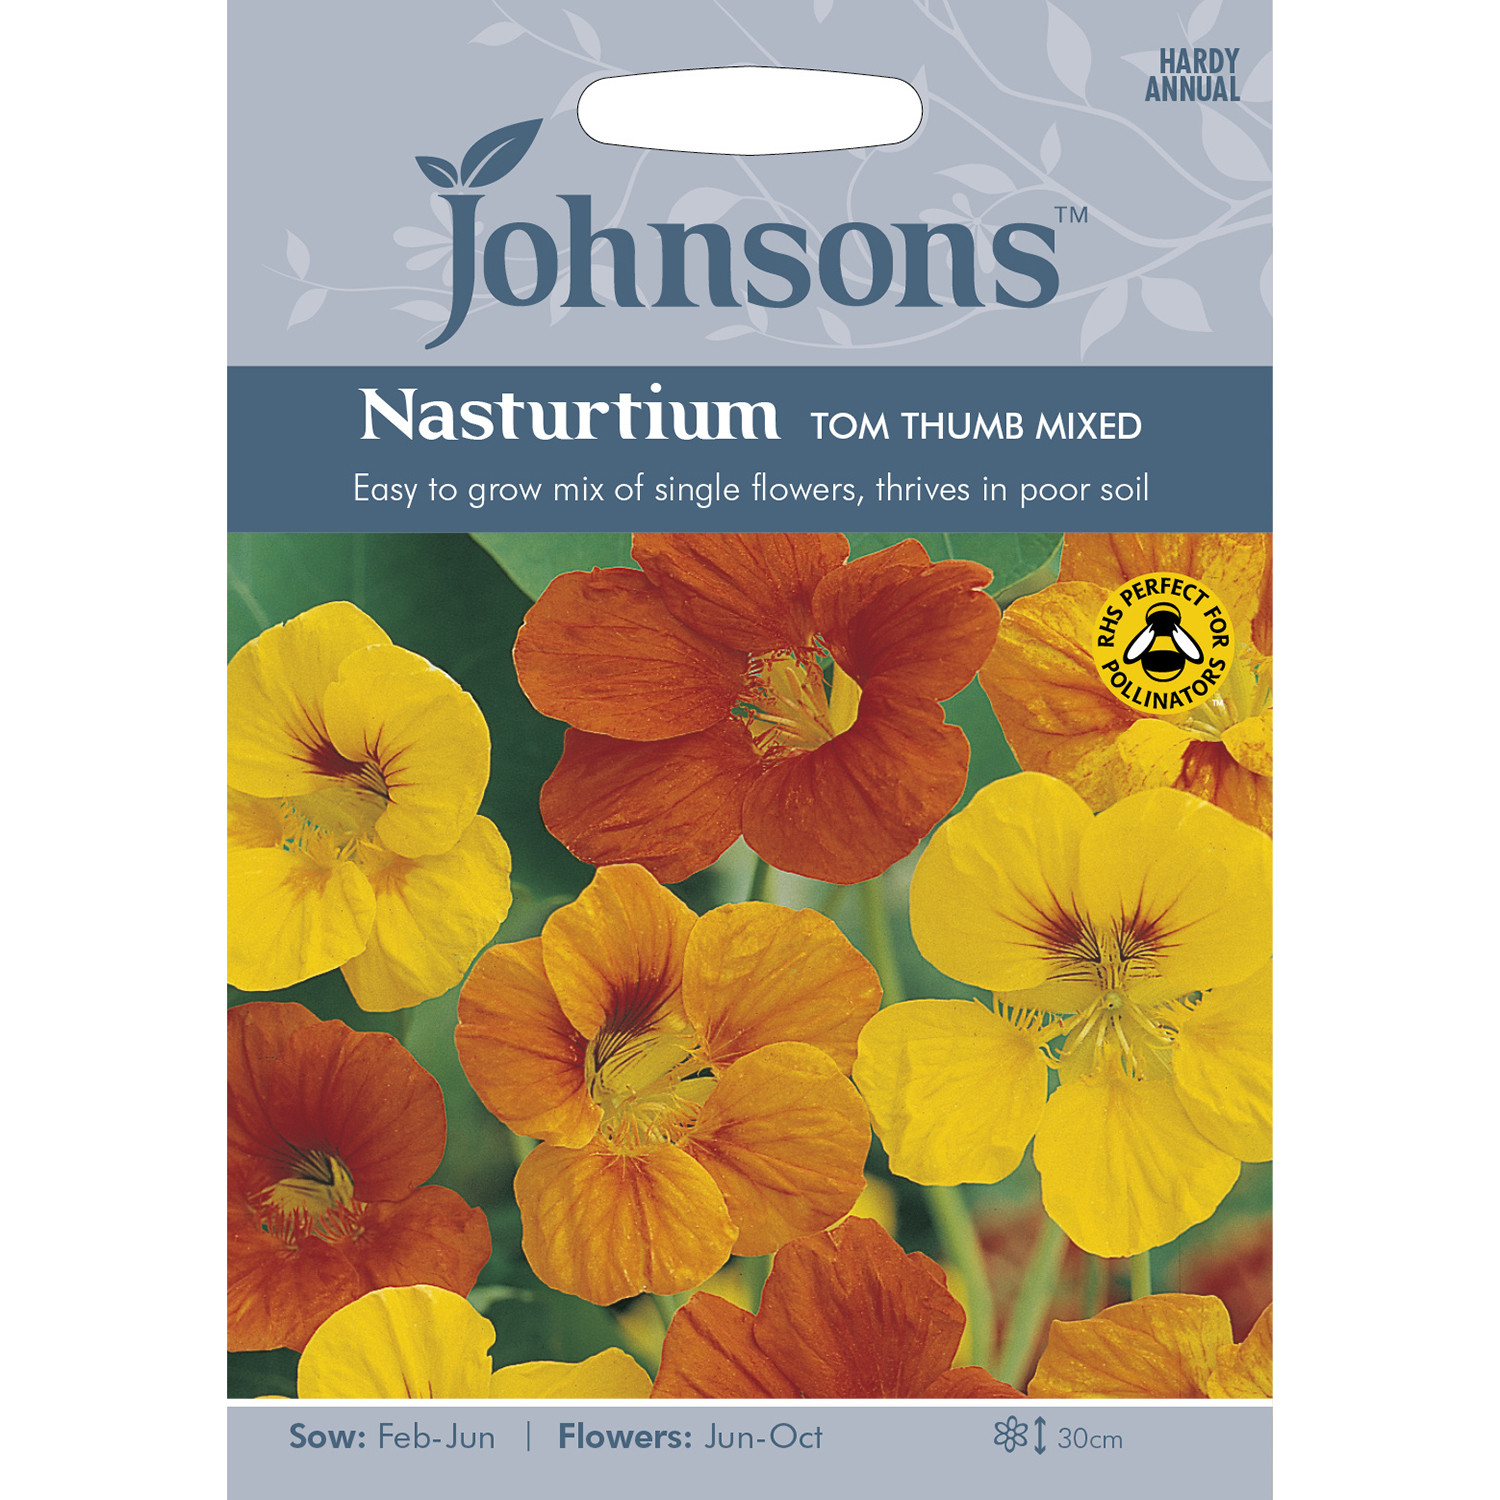 Johnsons Nasturtium Tom Thumb Mixed Flower Seeds Image 2